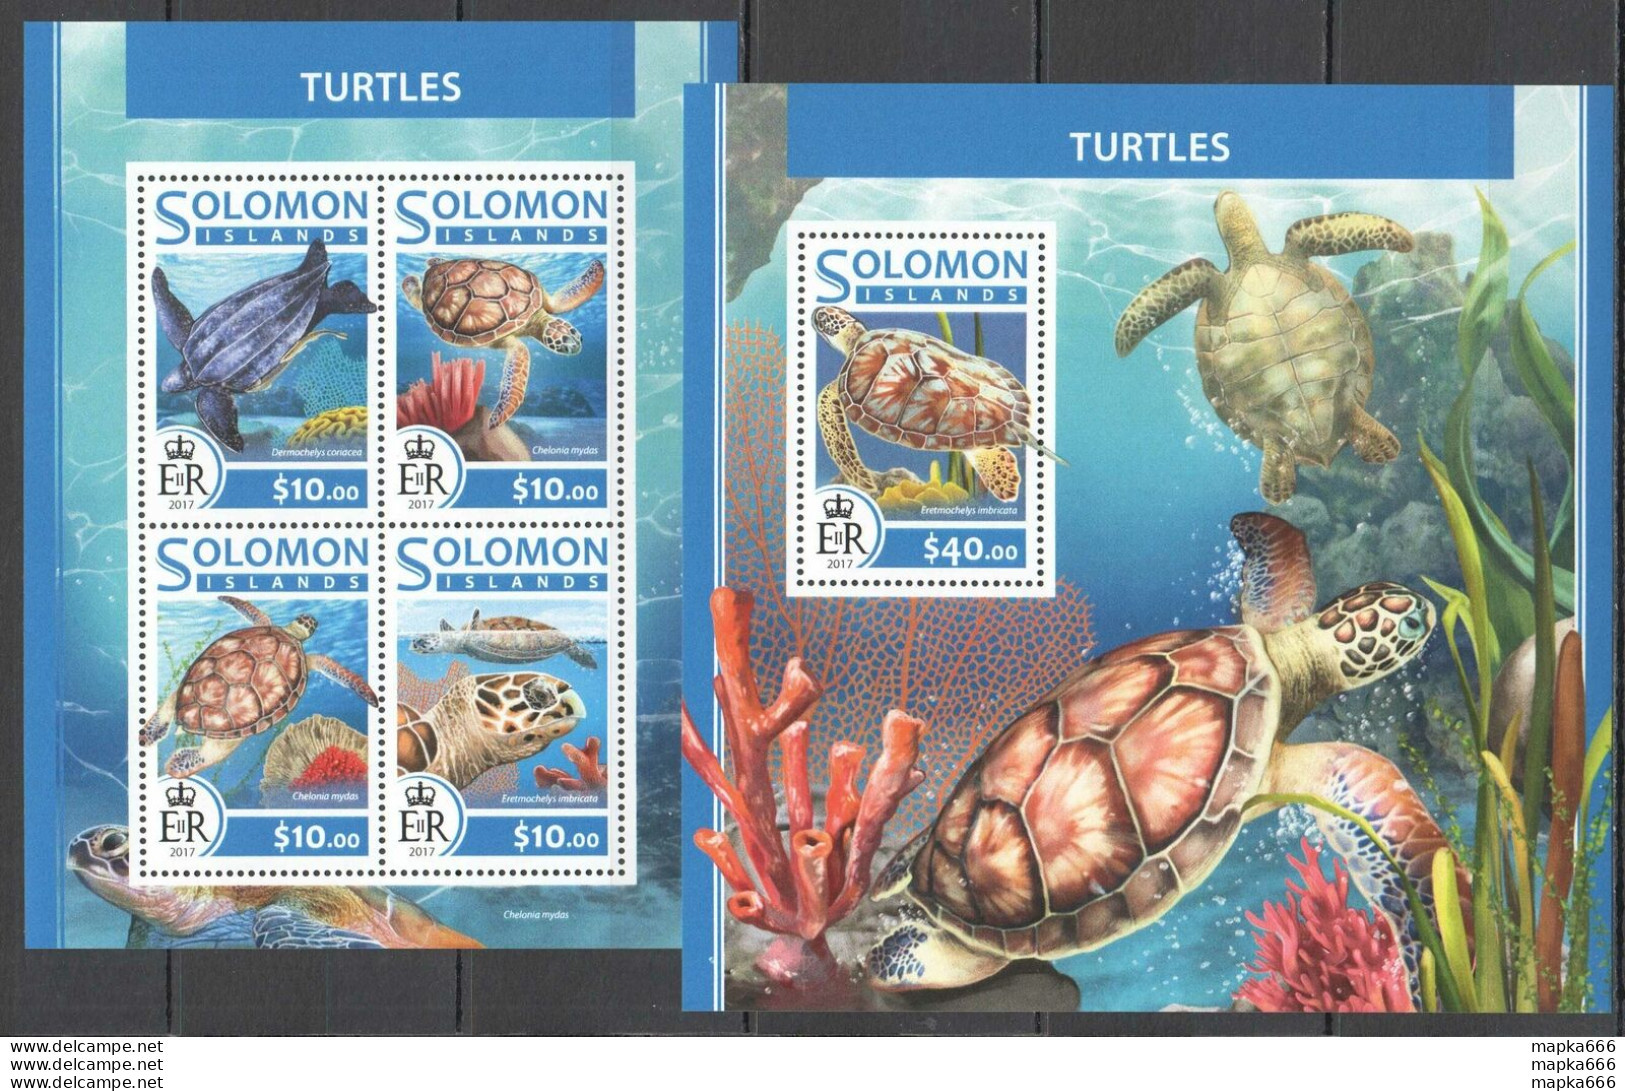 Ls743 2017 Solomon Islands Turtles Reptiles Marine Life #4436-40 1Kb+1Bl Mnh - Marine Life